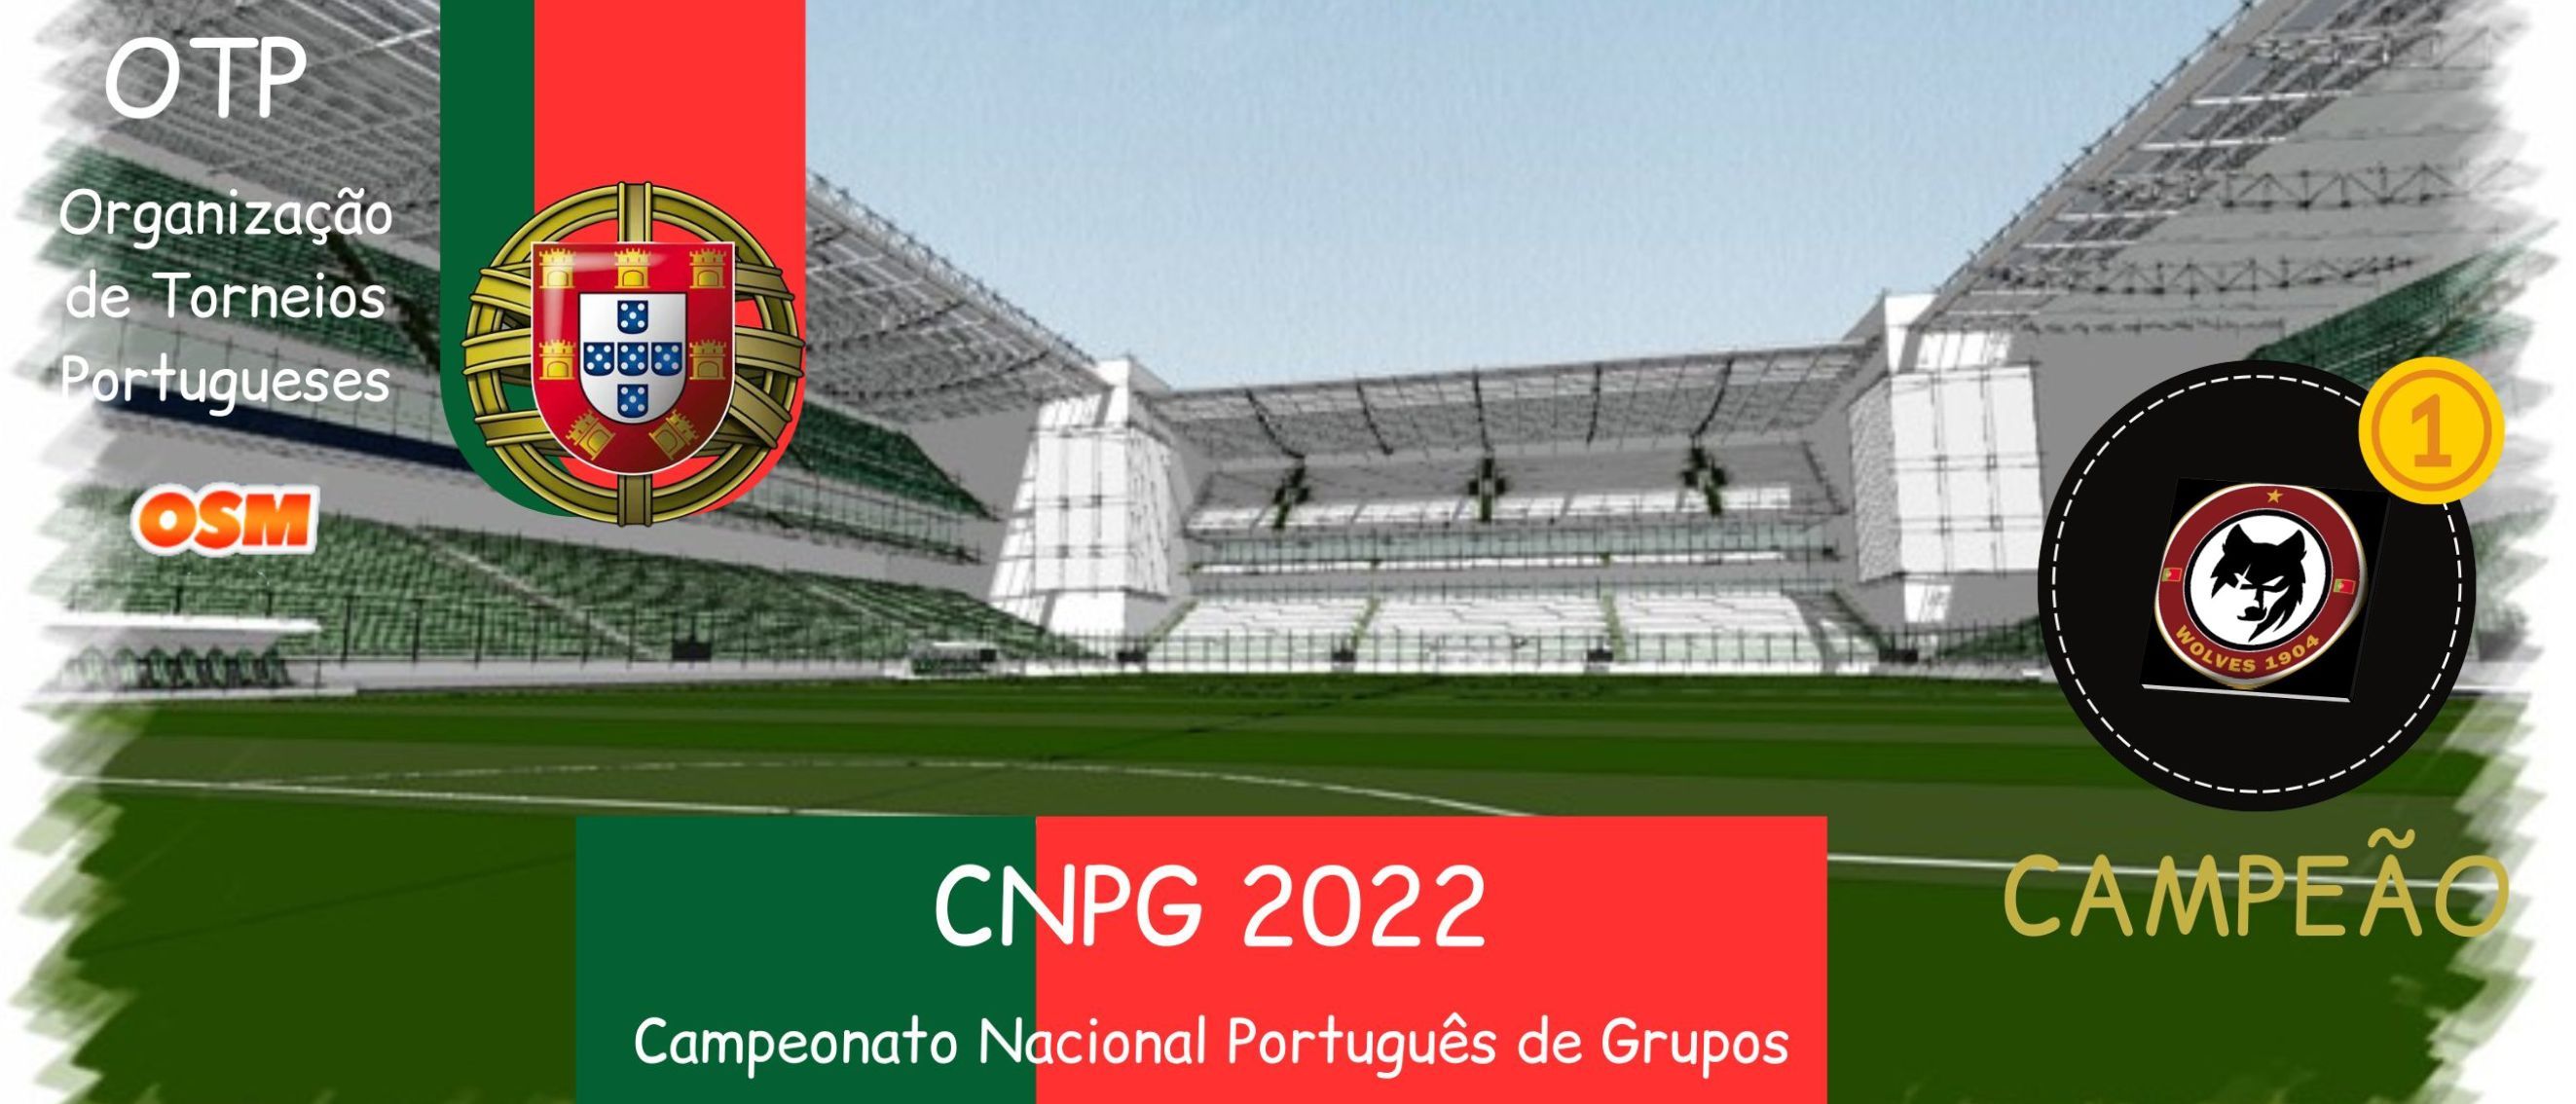 CNPG CAMPEÃO.jpg